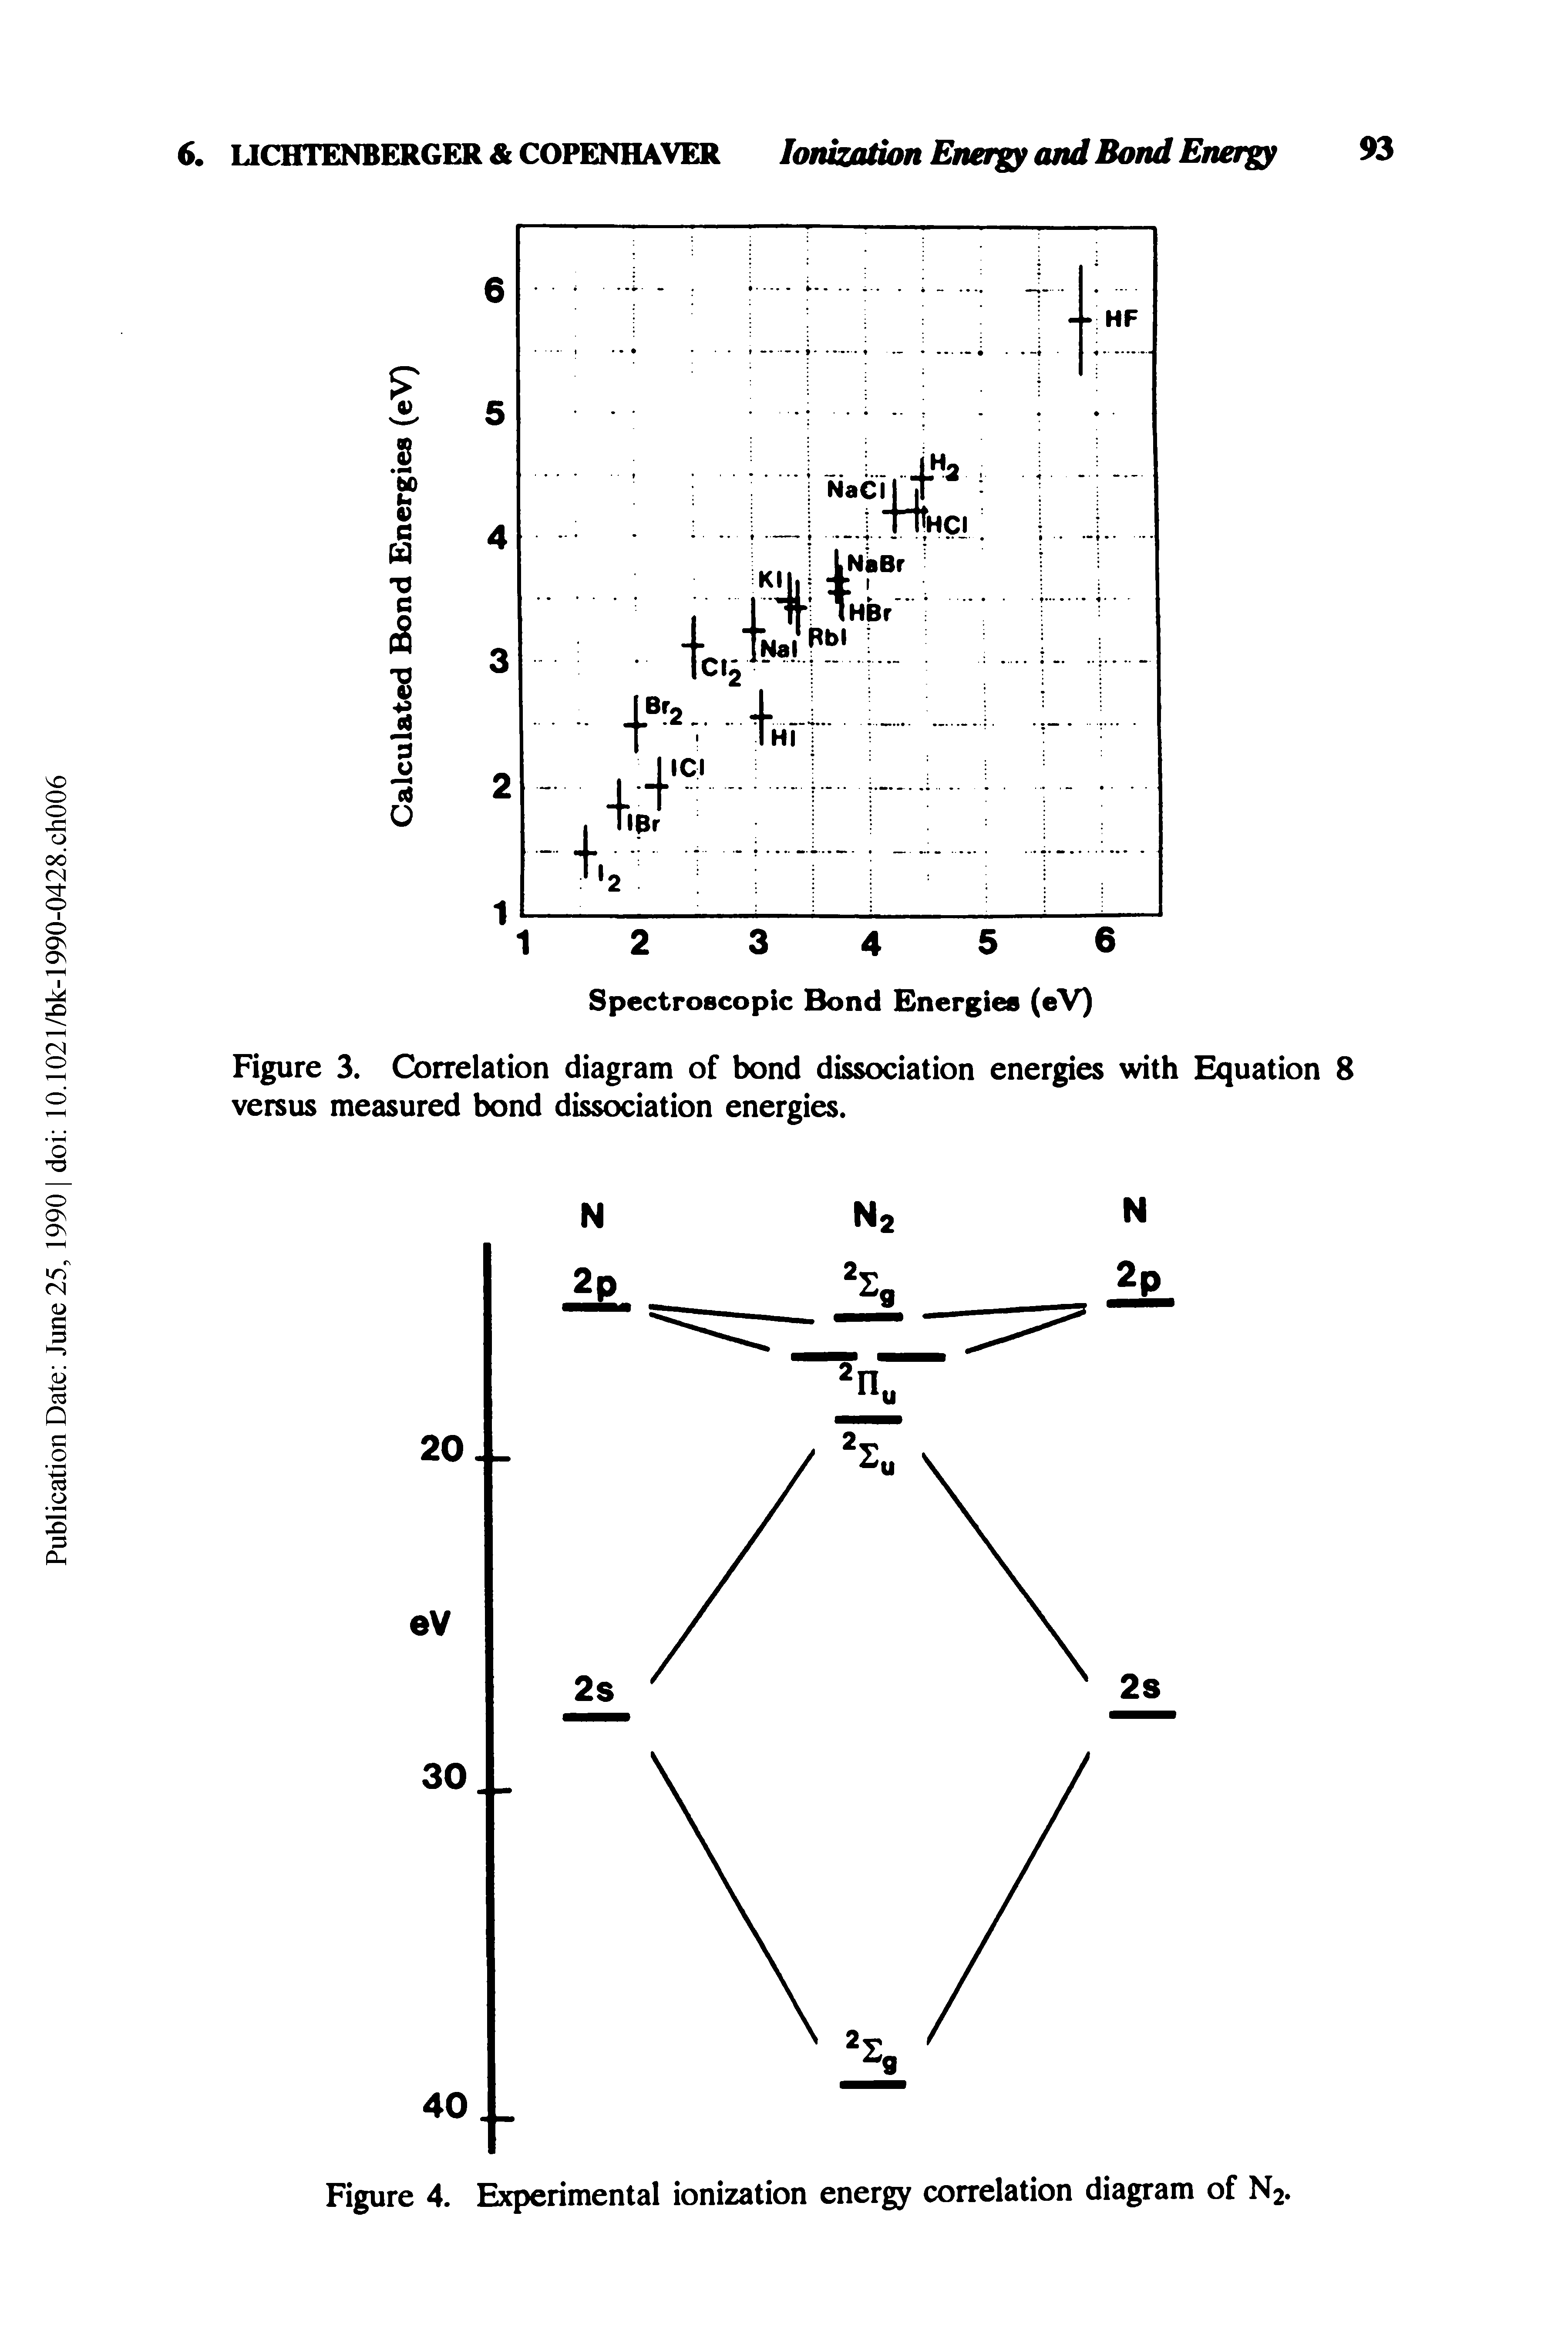 Figure 4. Experimental ionization energy correlation diagram of N2.